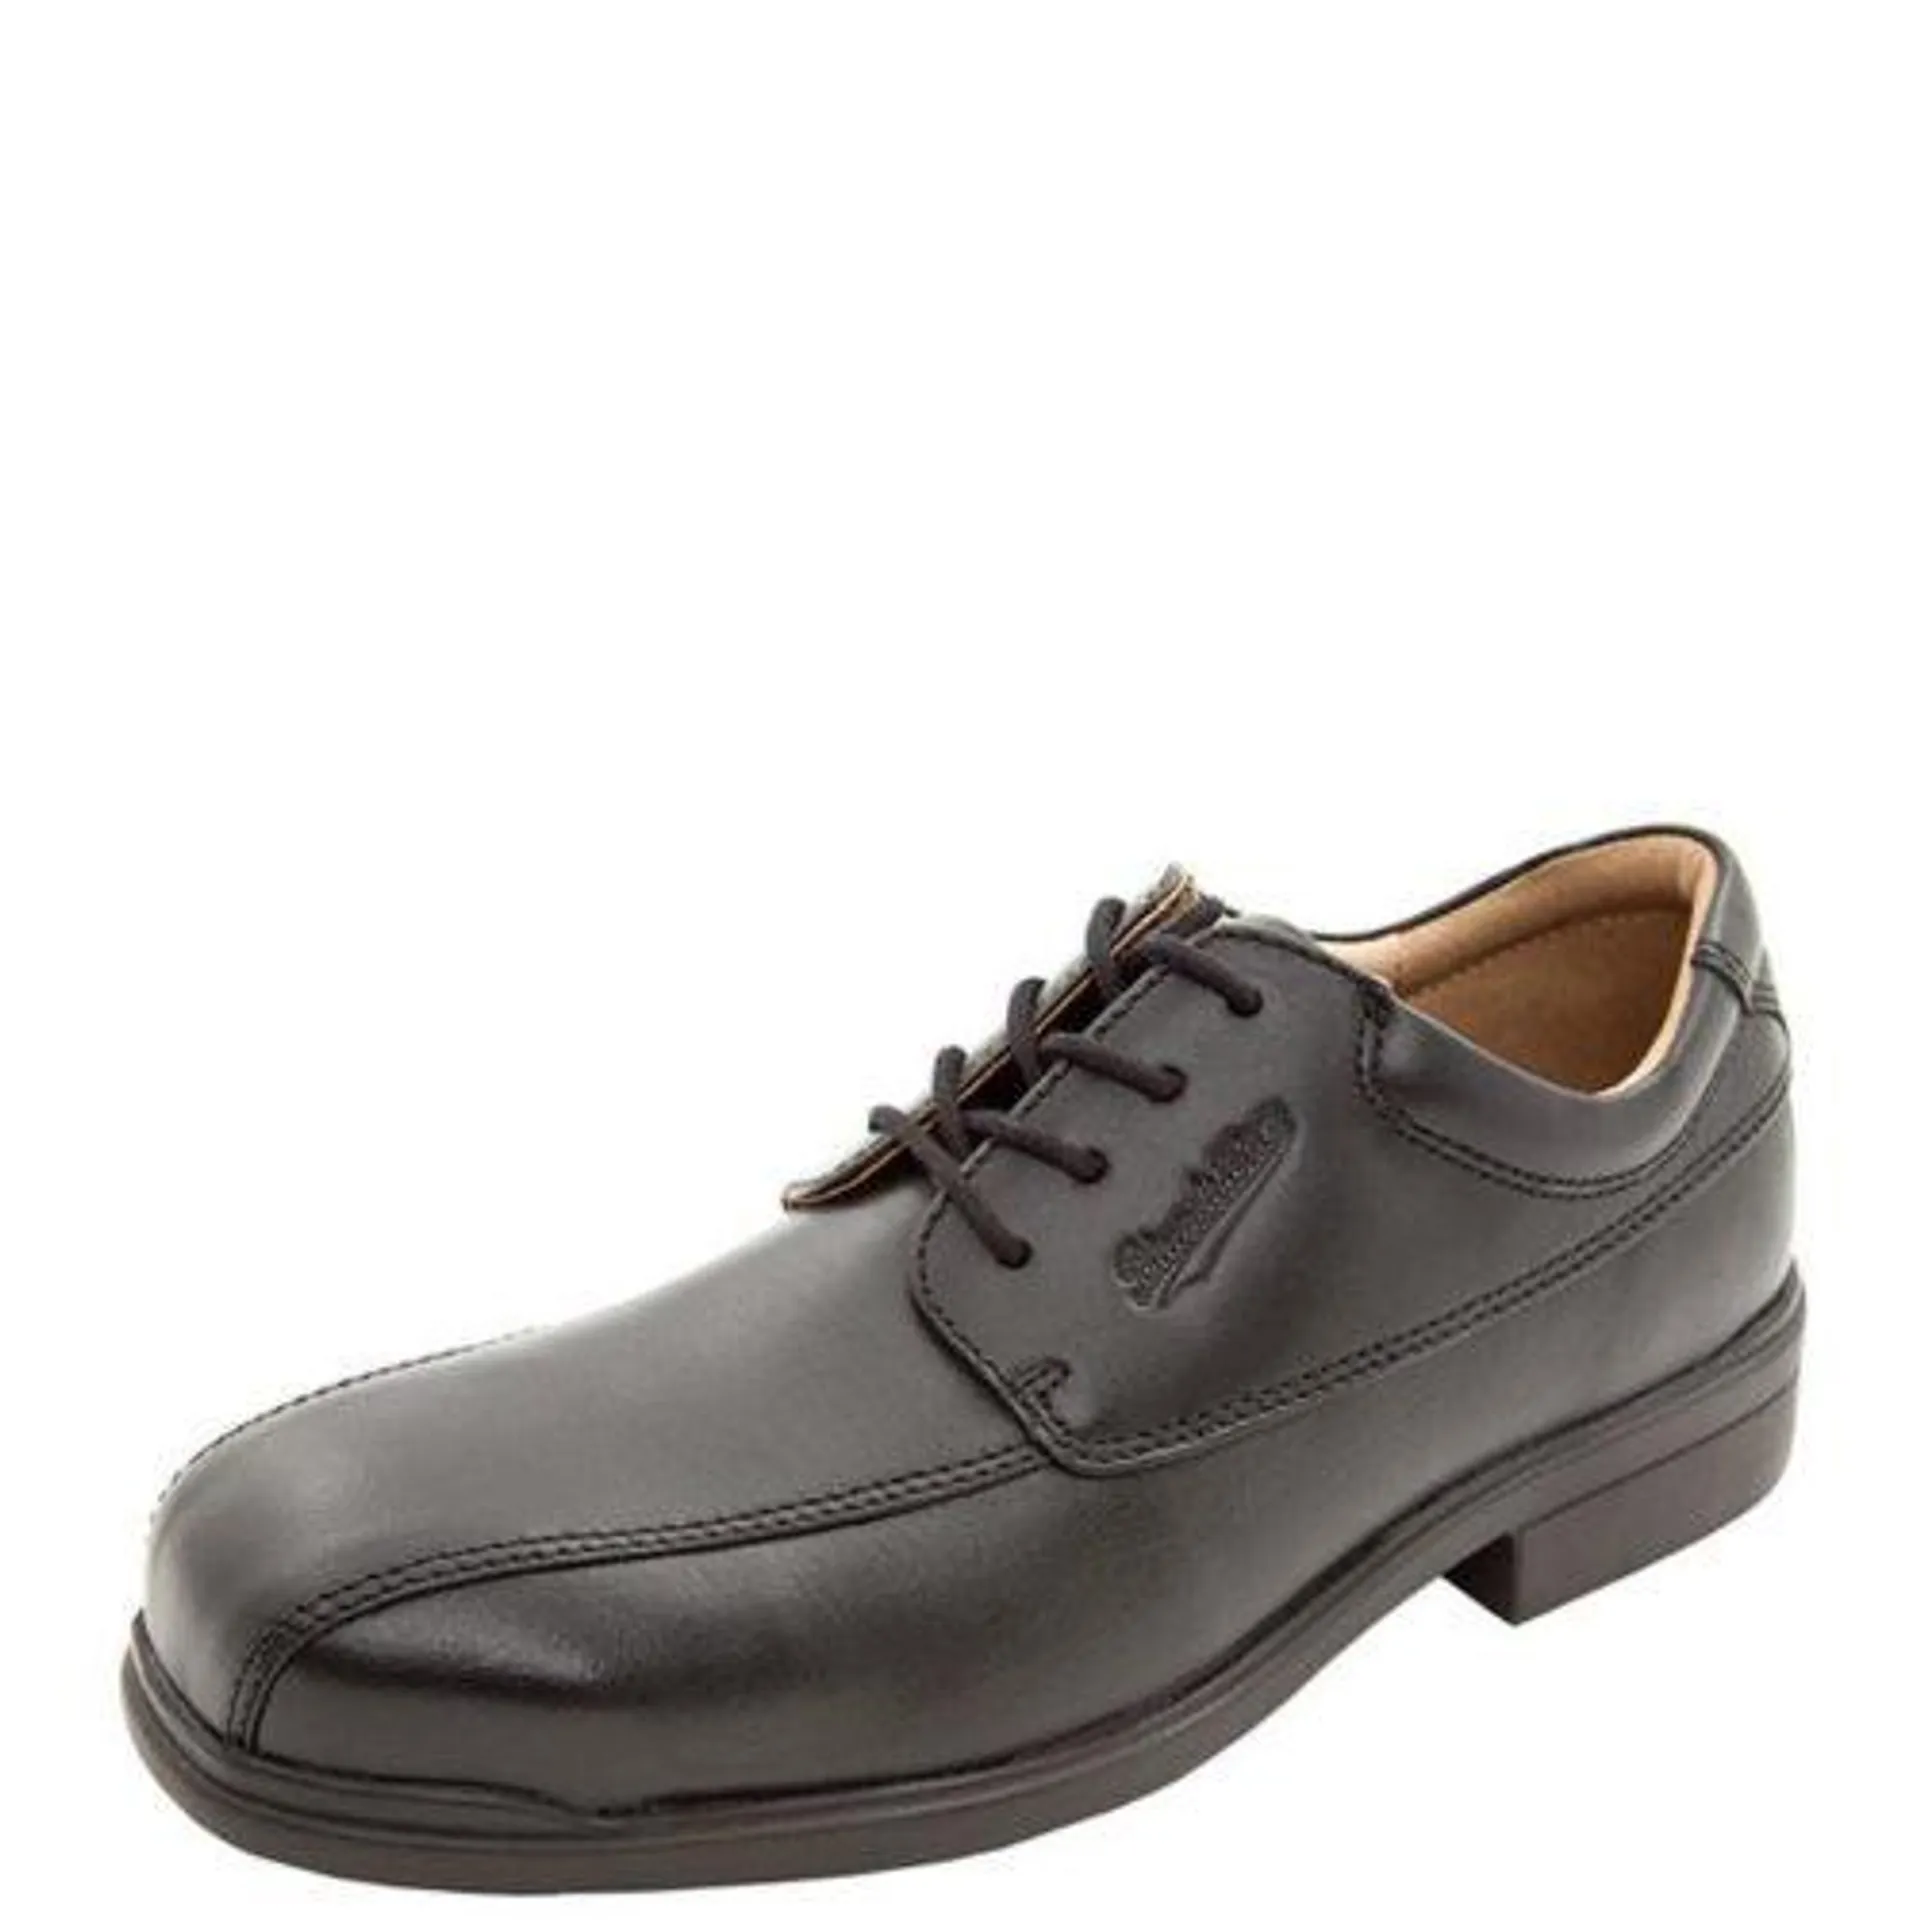 Blundstone Style 780 Lace Up Executive Safety Shoe